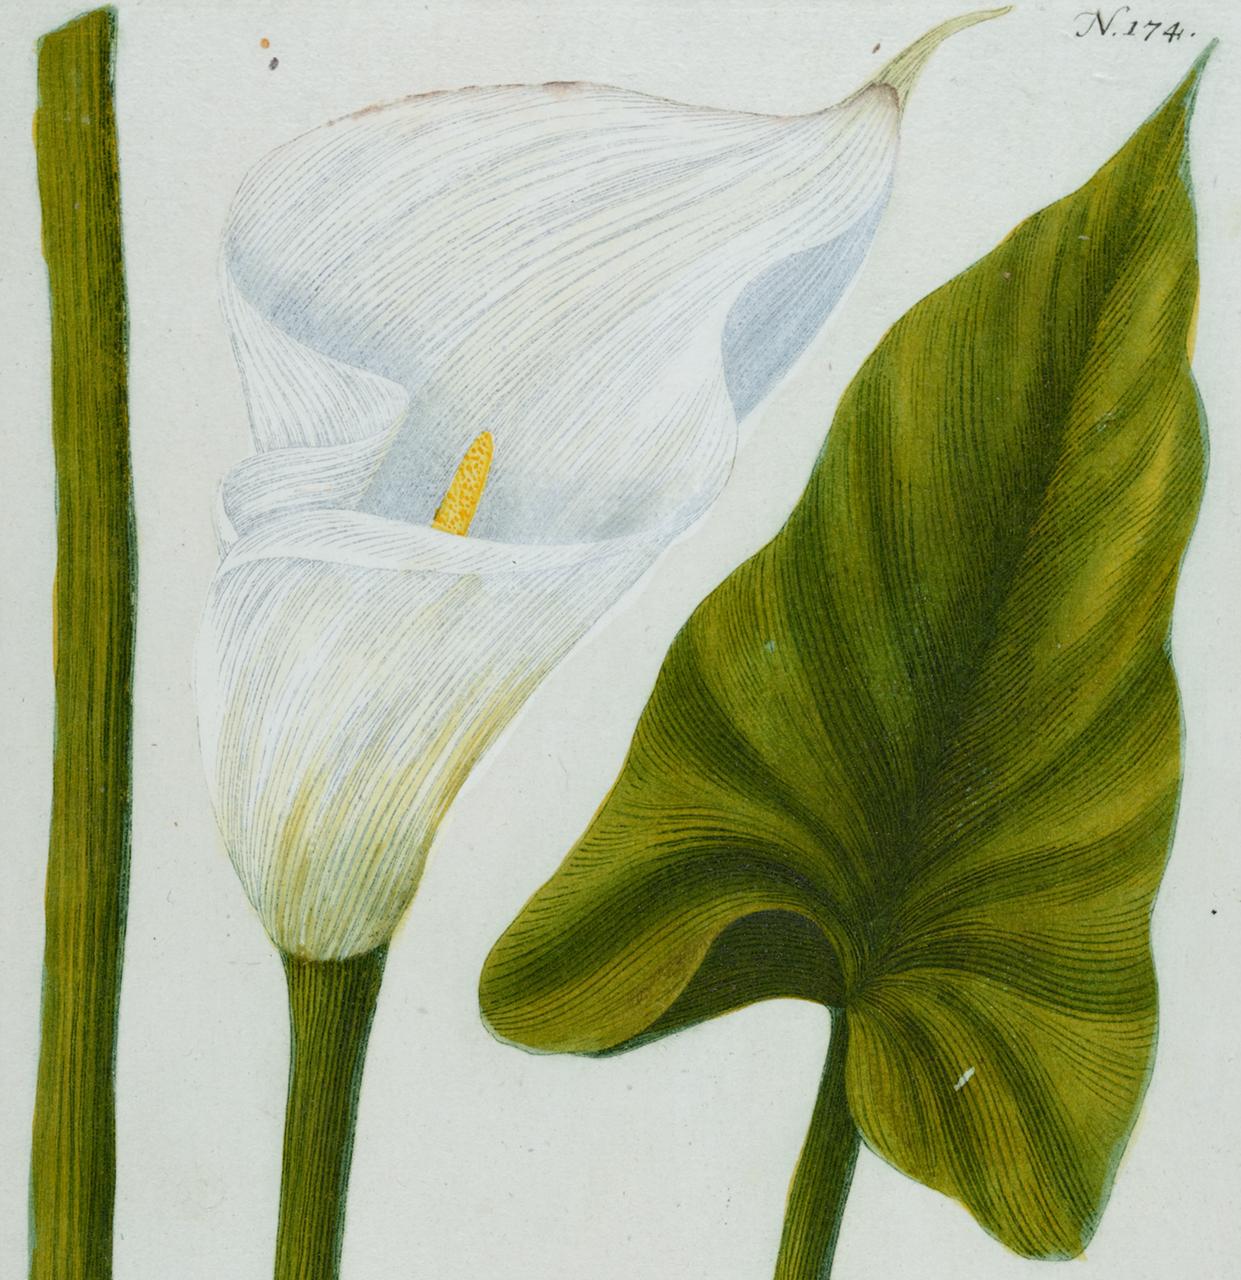 Calla Lily: An 18th Century Hand-colored Botanical Engraving by J. Weinmann - Naturalistic Print by Johann Wilhelm Weinmann